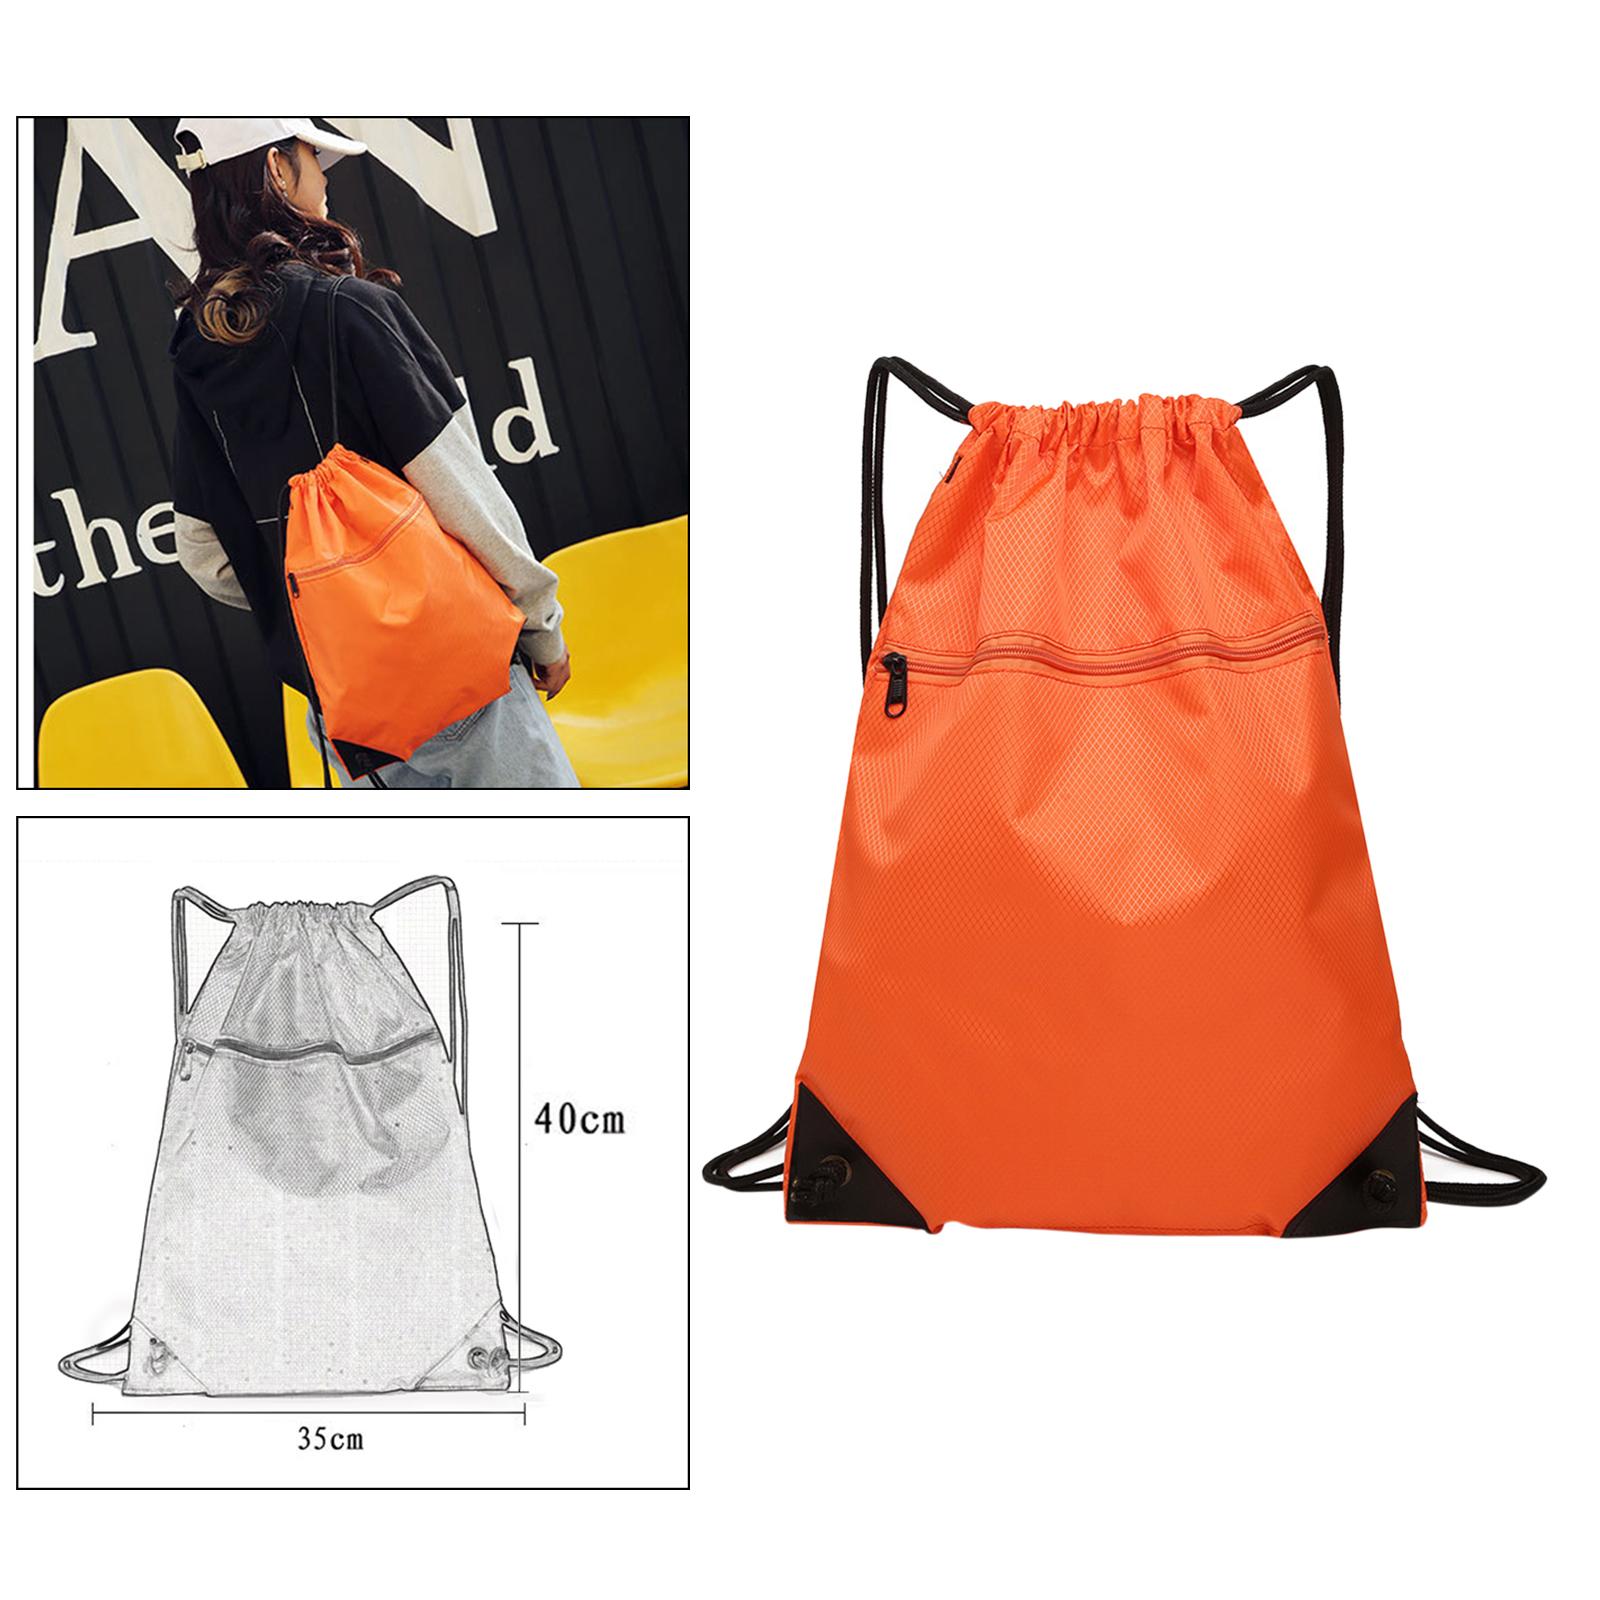 Travel Nylon Drawstring Bag Sack Beach Gym Backpack Shoes Bags Orange